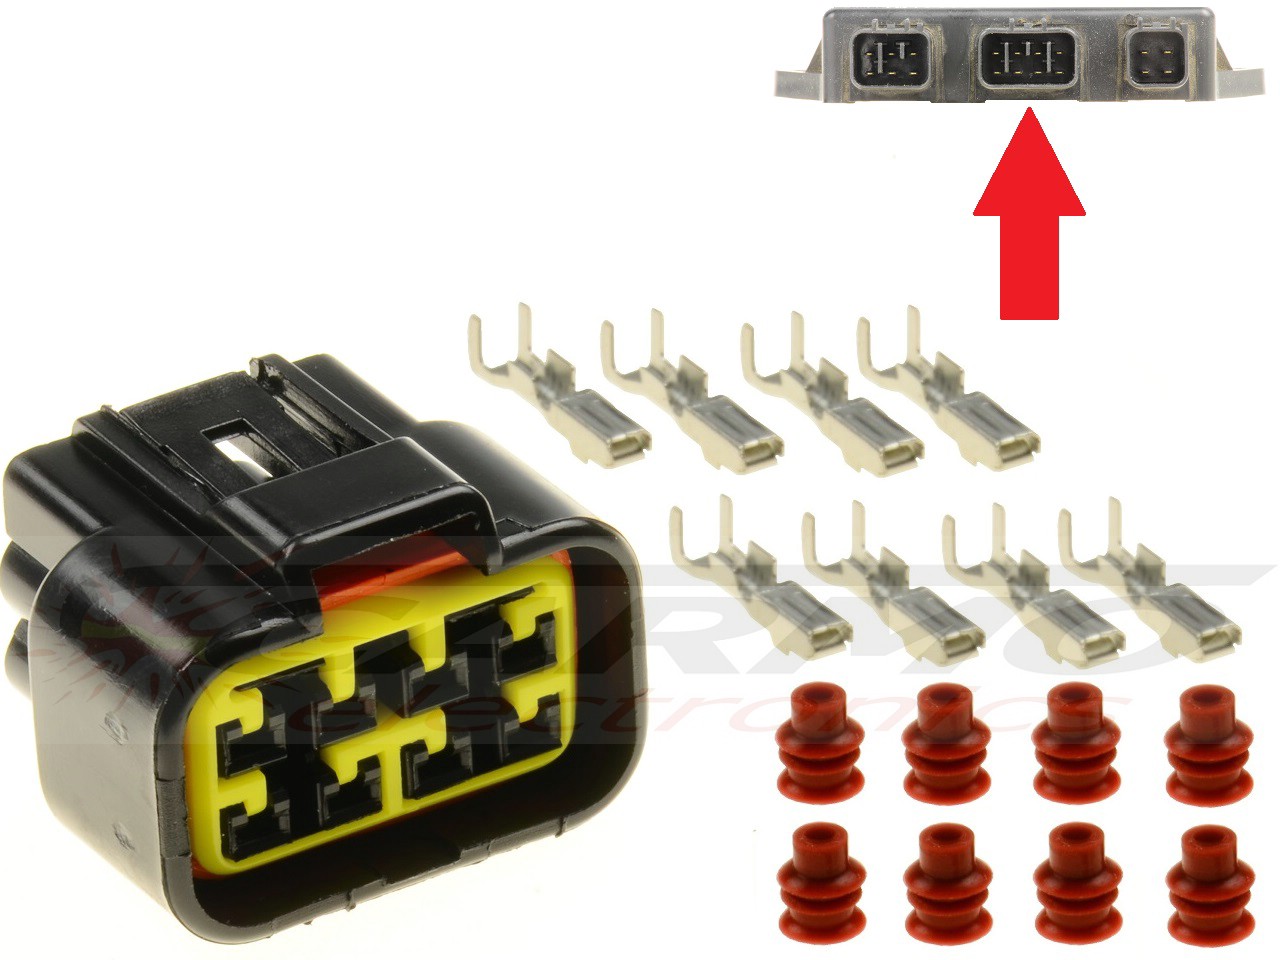 8 polige CDI ECU stekker stekker voor [CARC020-8F (8 way CDI €8,00 : Carmo Electronics - parts or electronics